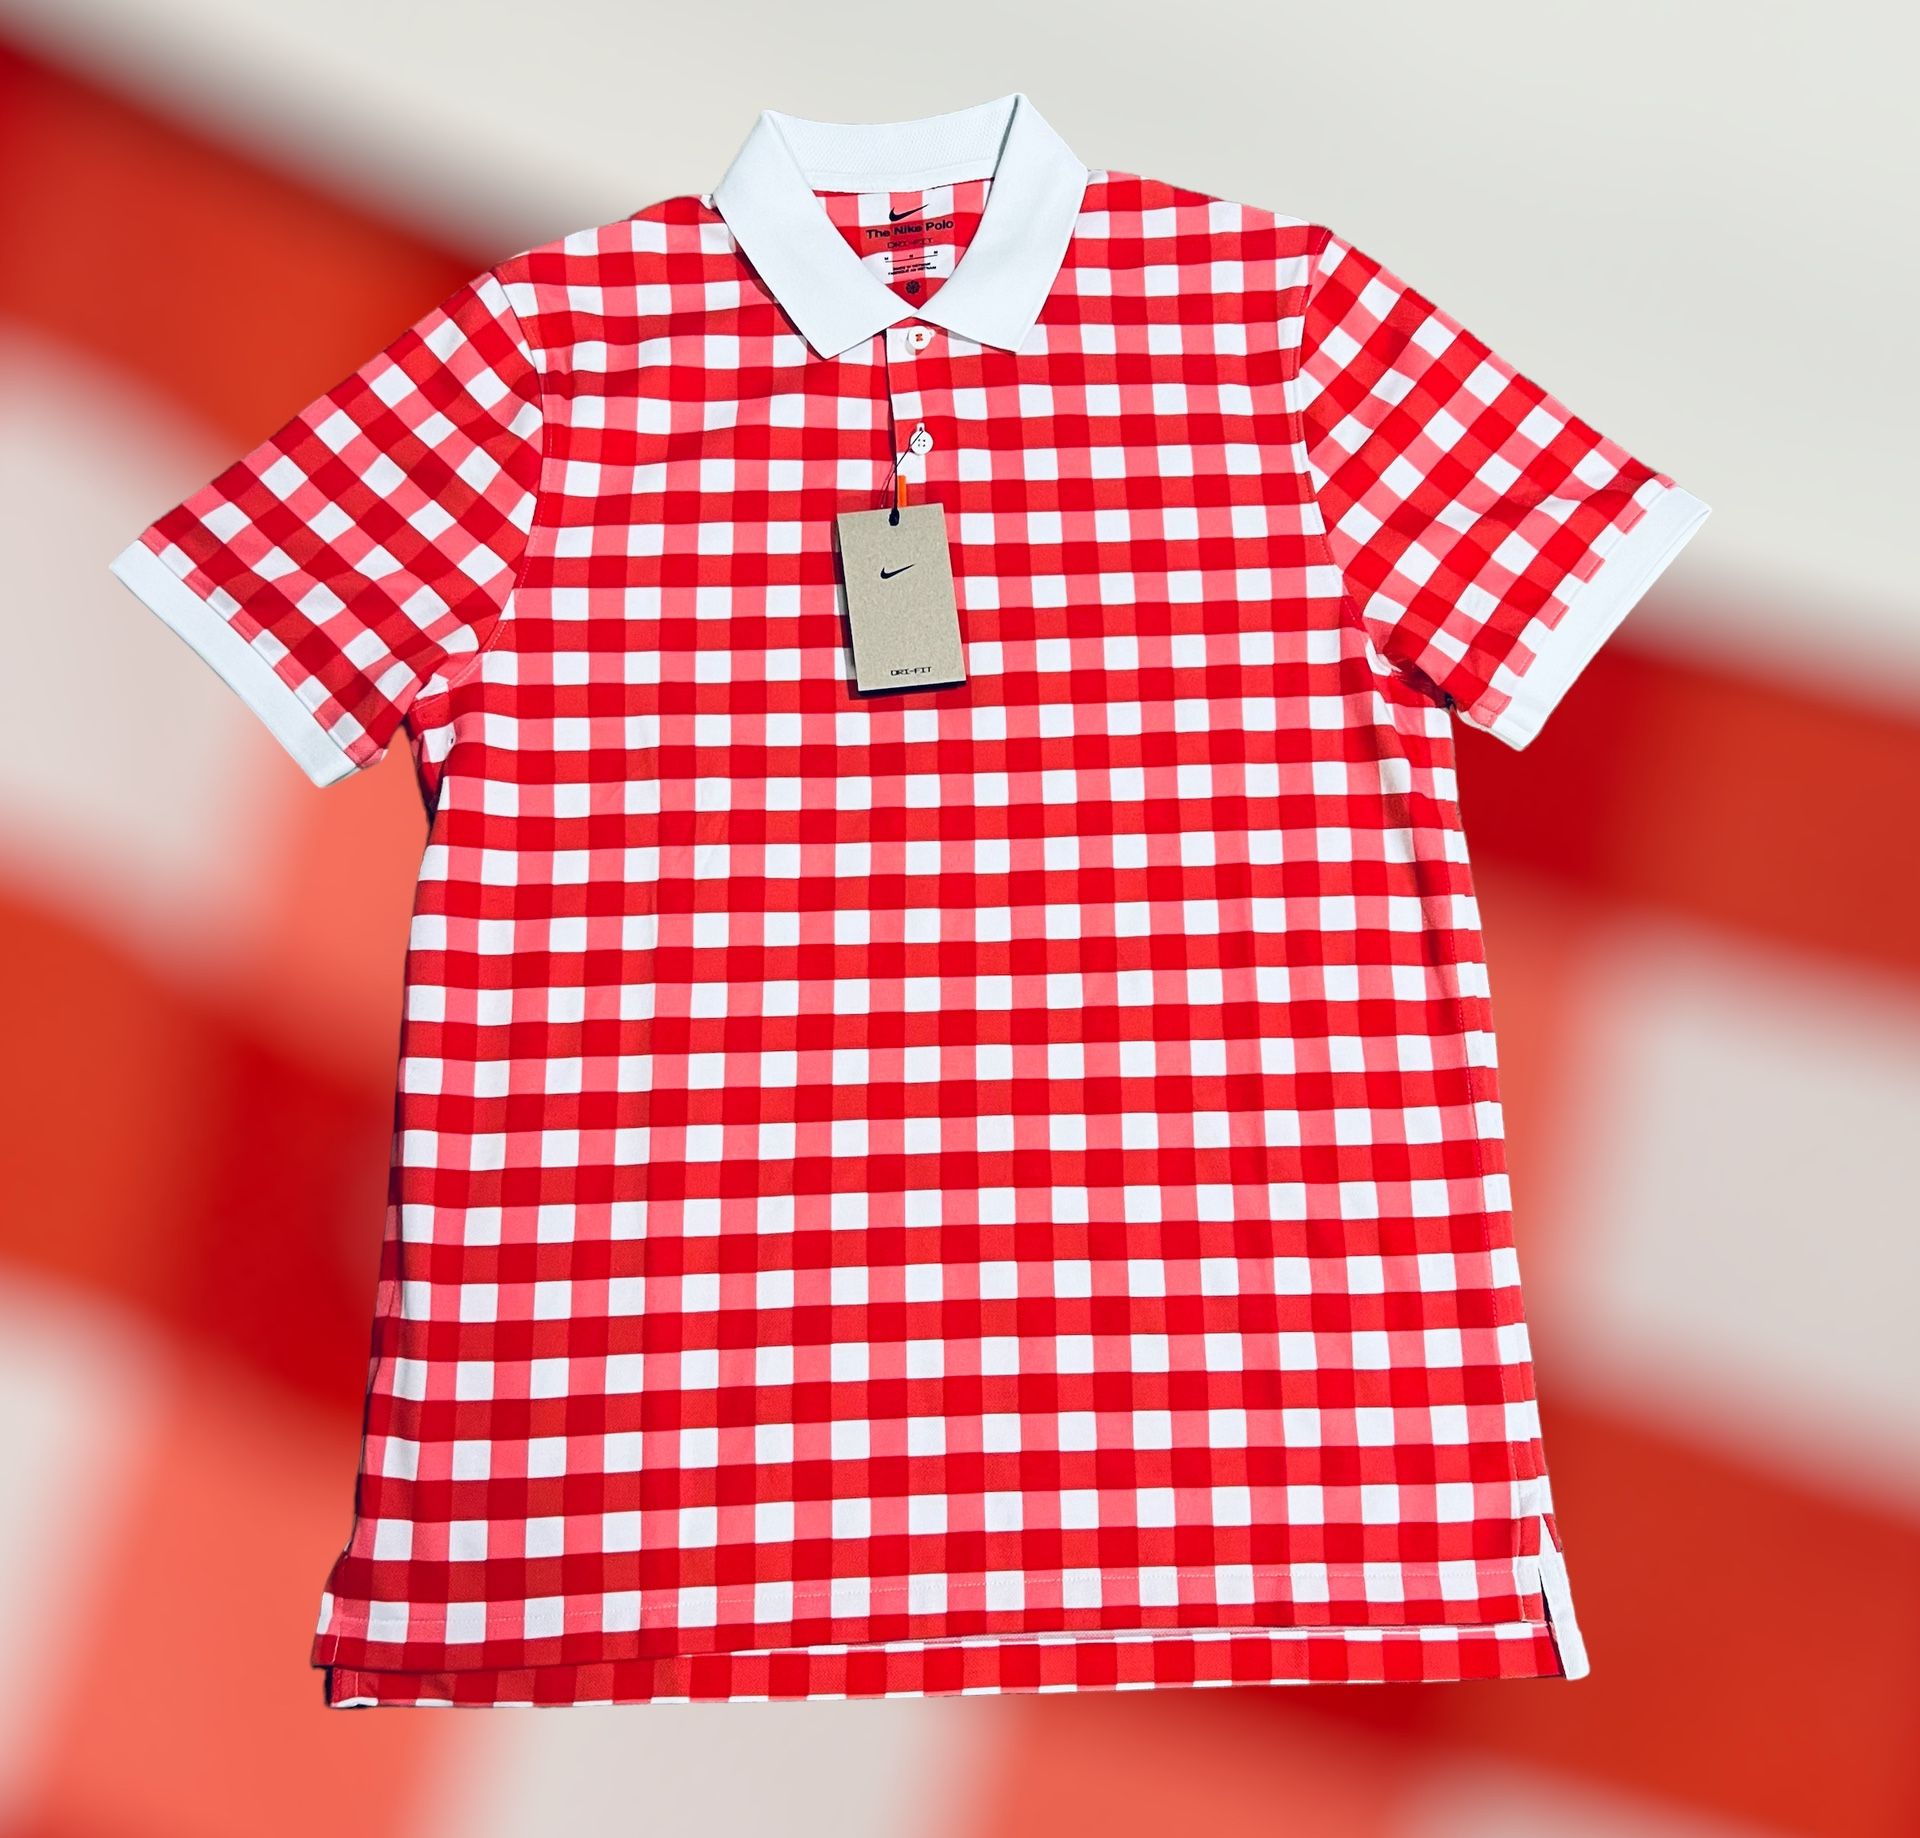  Nike Golf Dri-FIT Gingham Checkered Polo Shirt Red White MEDIUM NWT